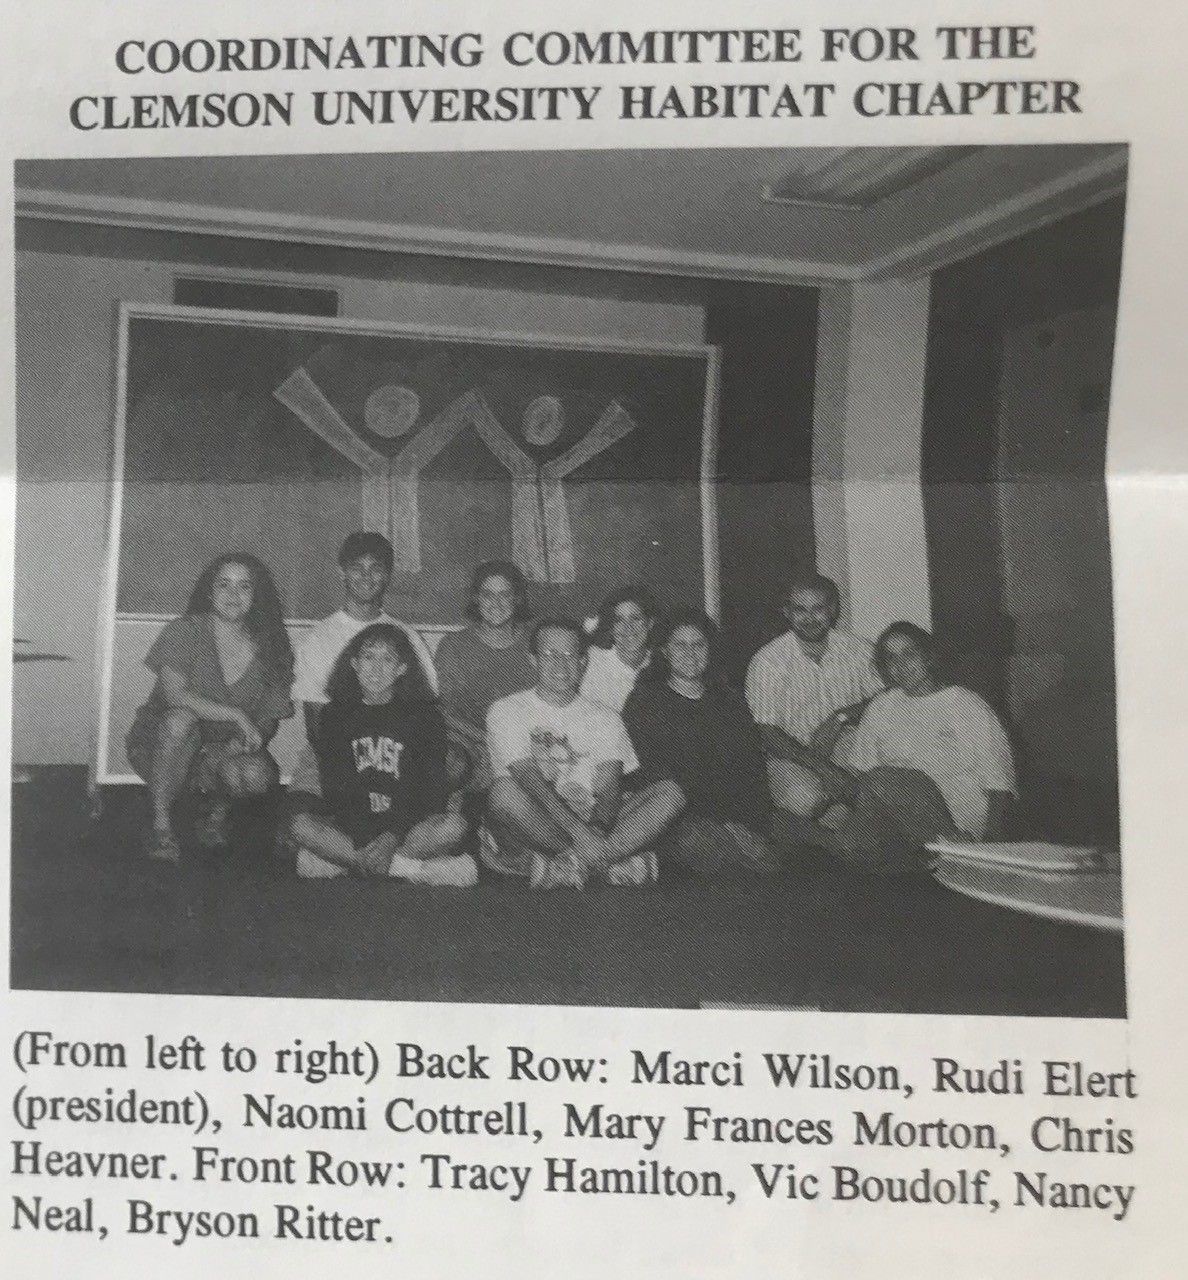 1992 – Clemson University Campus Chapter forms.